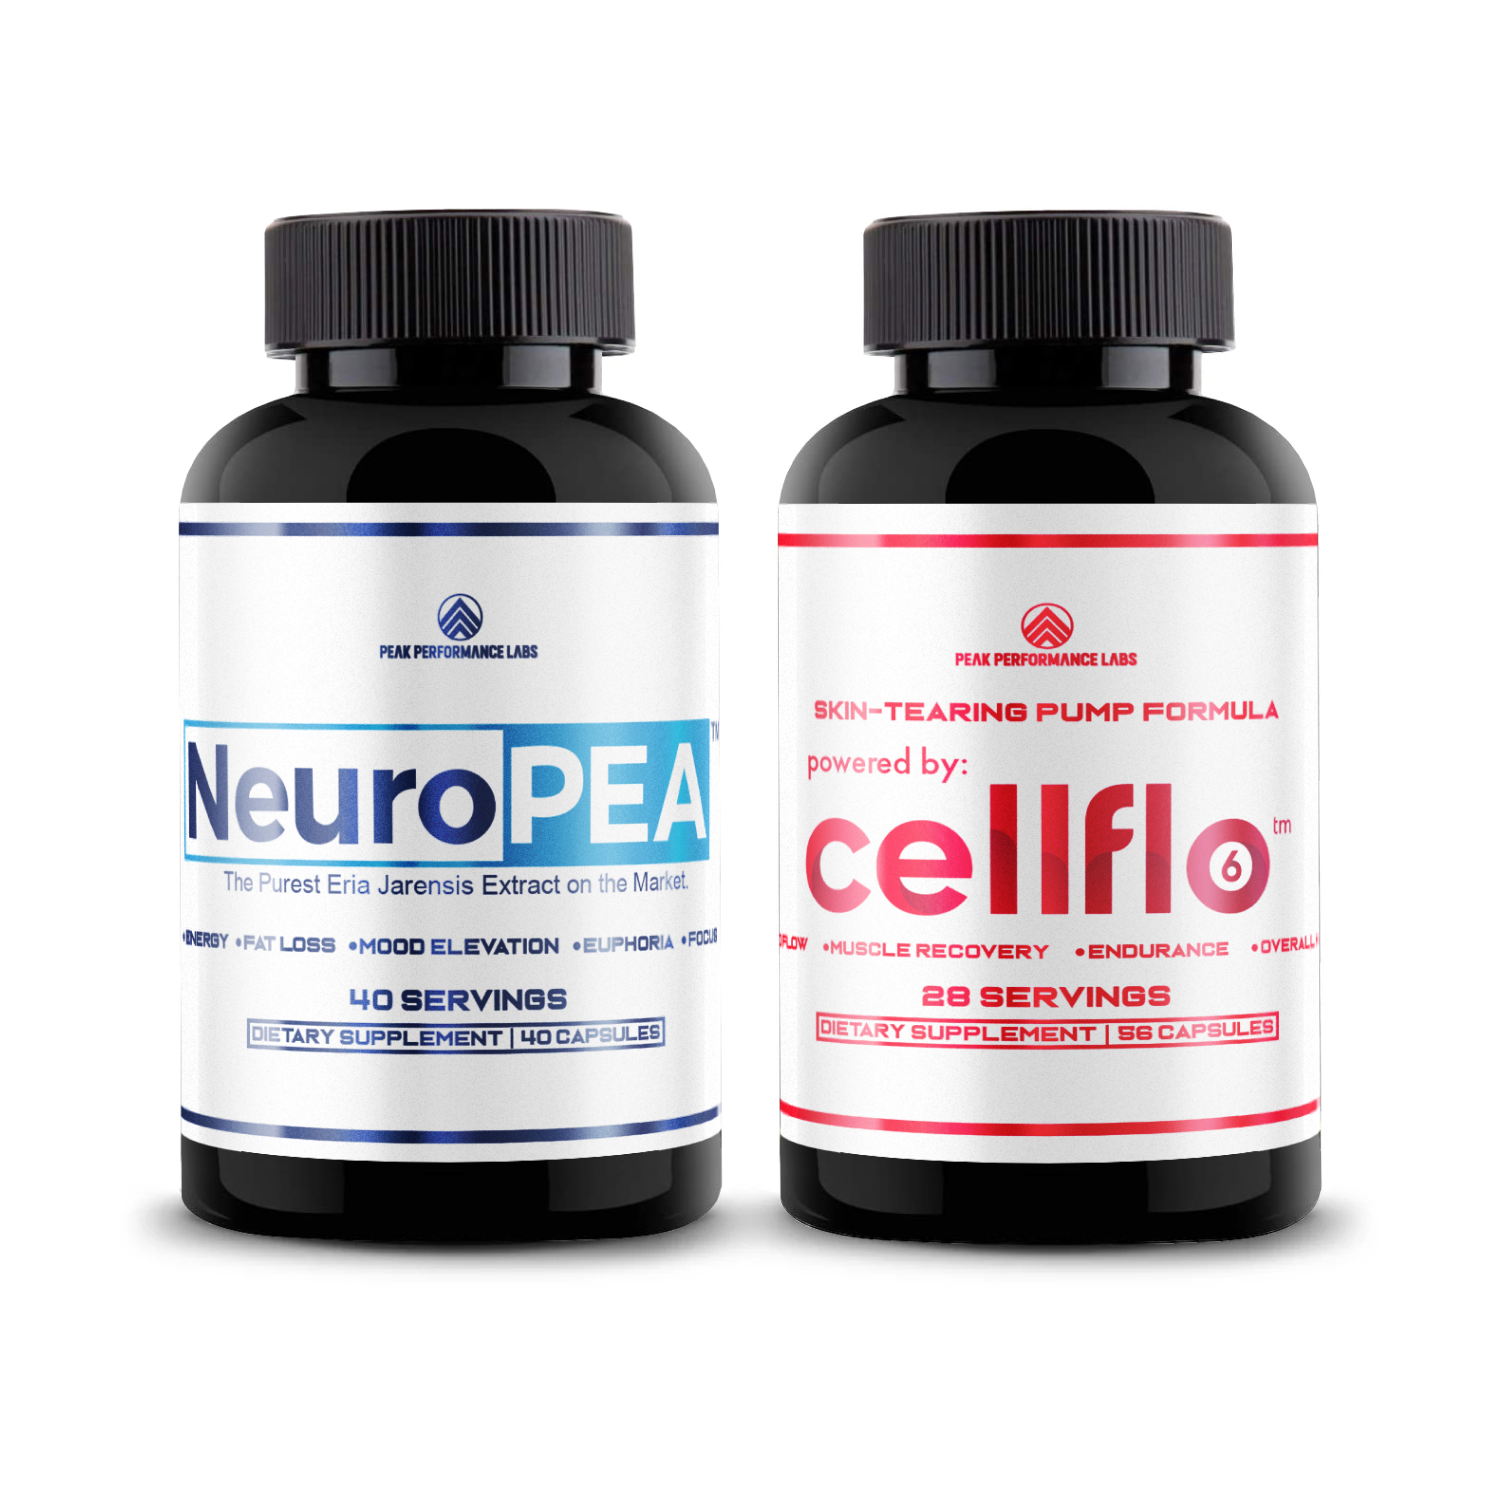 NeuroPEA + Cellflo6 Stack